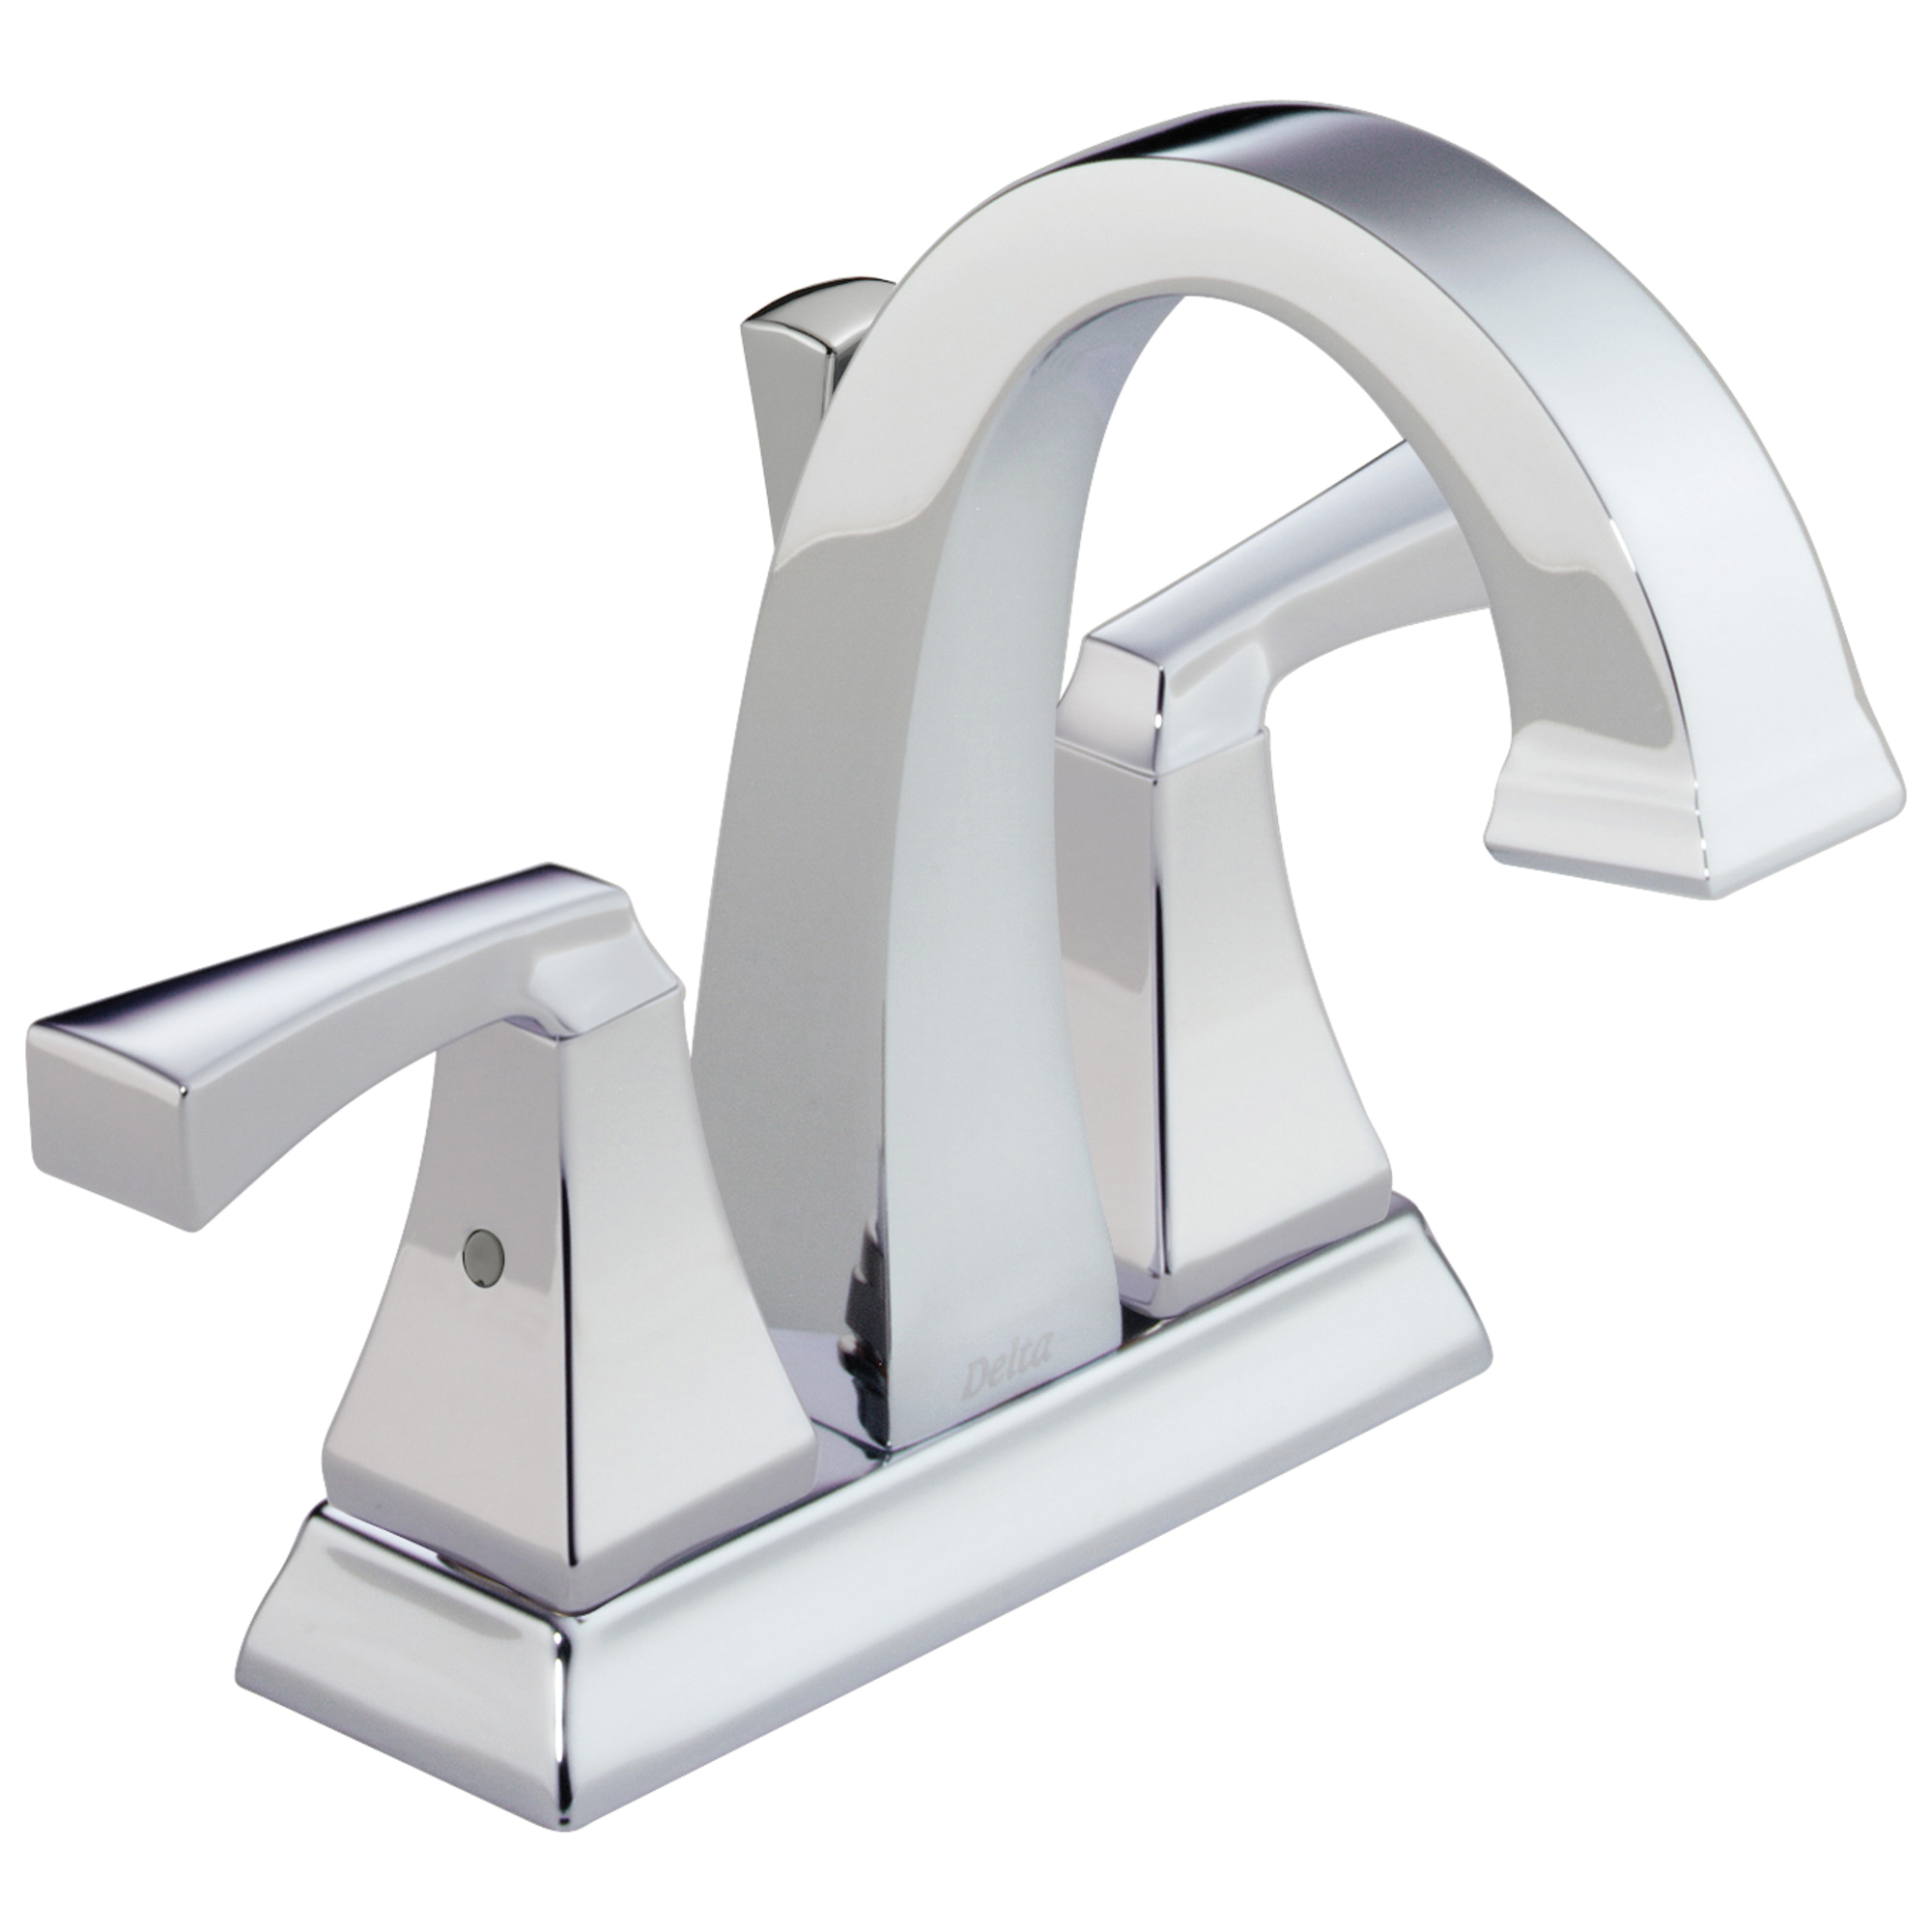 DELTA® 2551-MPU-DST Centerset Lavatory Faucet, Dryden™, Chrome Plated, 2 Handles, Metal Pop-Up Drain, 1.2 gpm